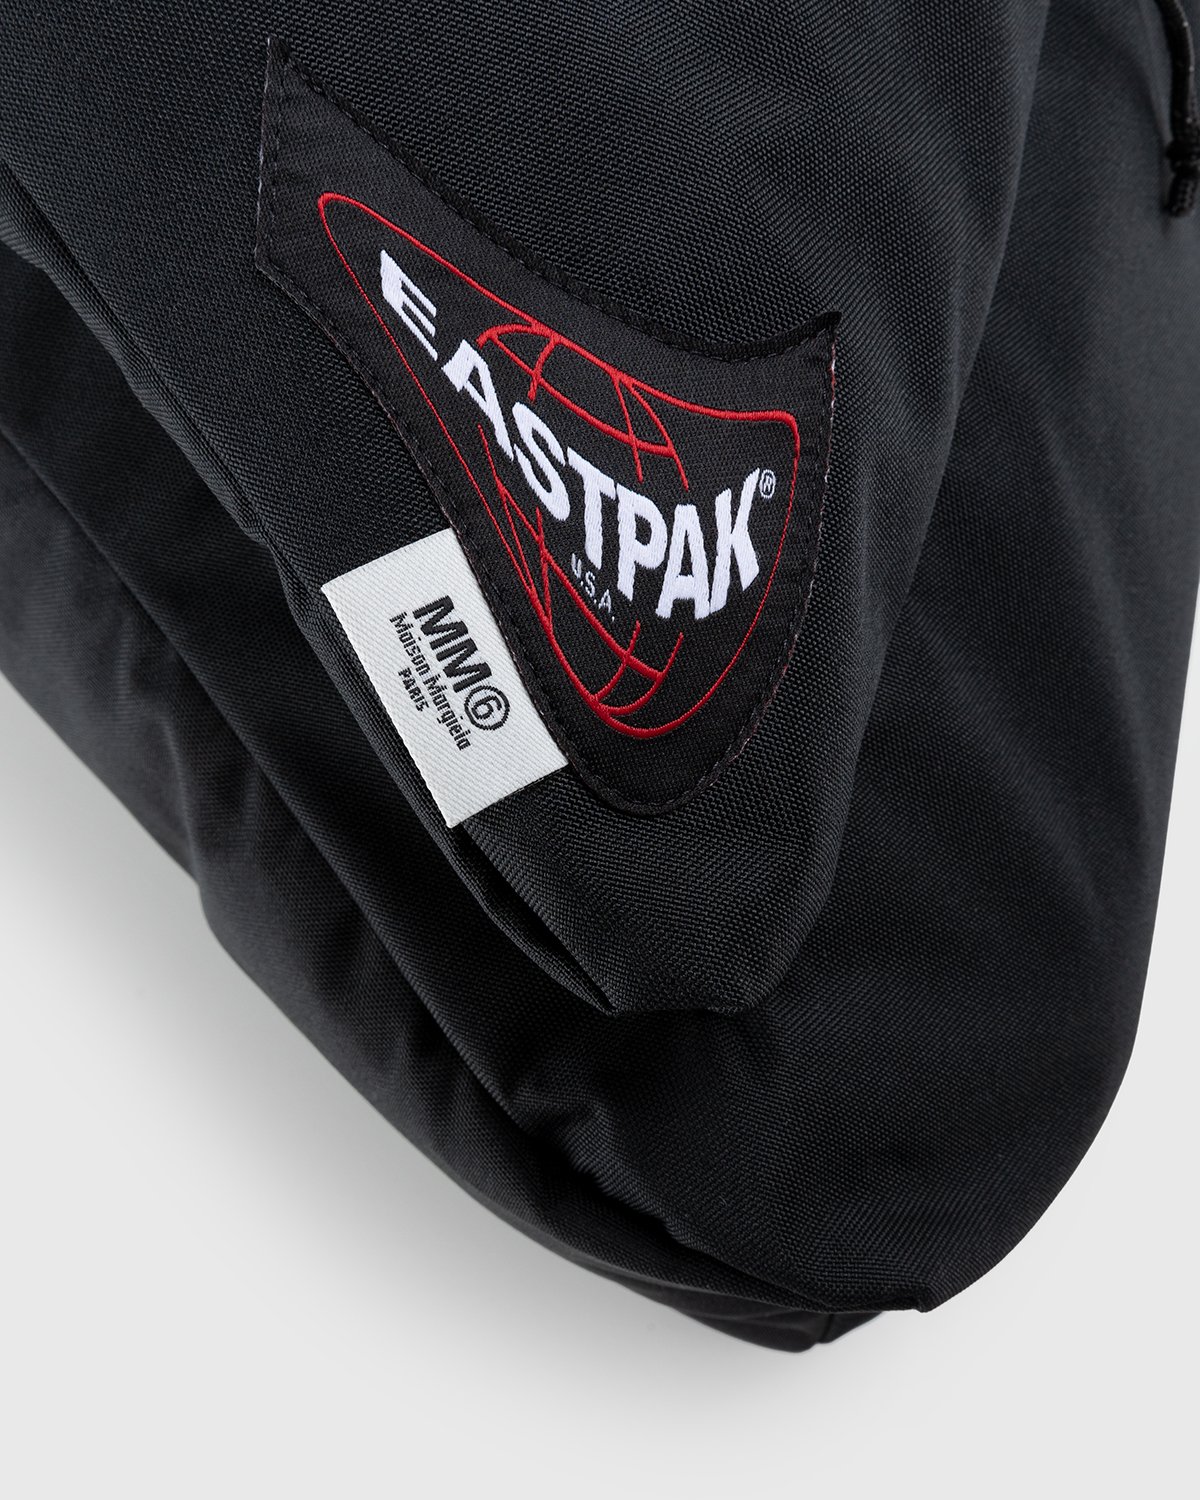 MM6 Maison Margiela x Eastpak - Zaino Backpack Black - Accessories - Black - Image 4